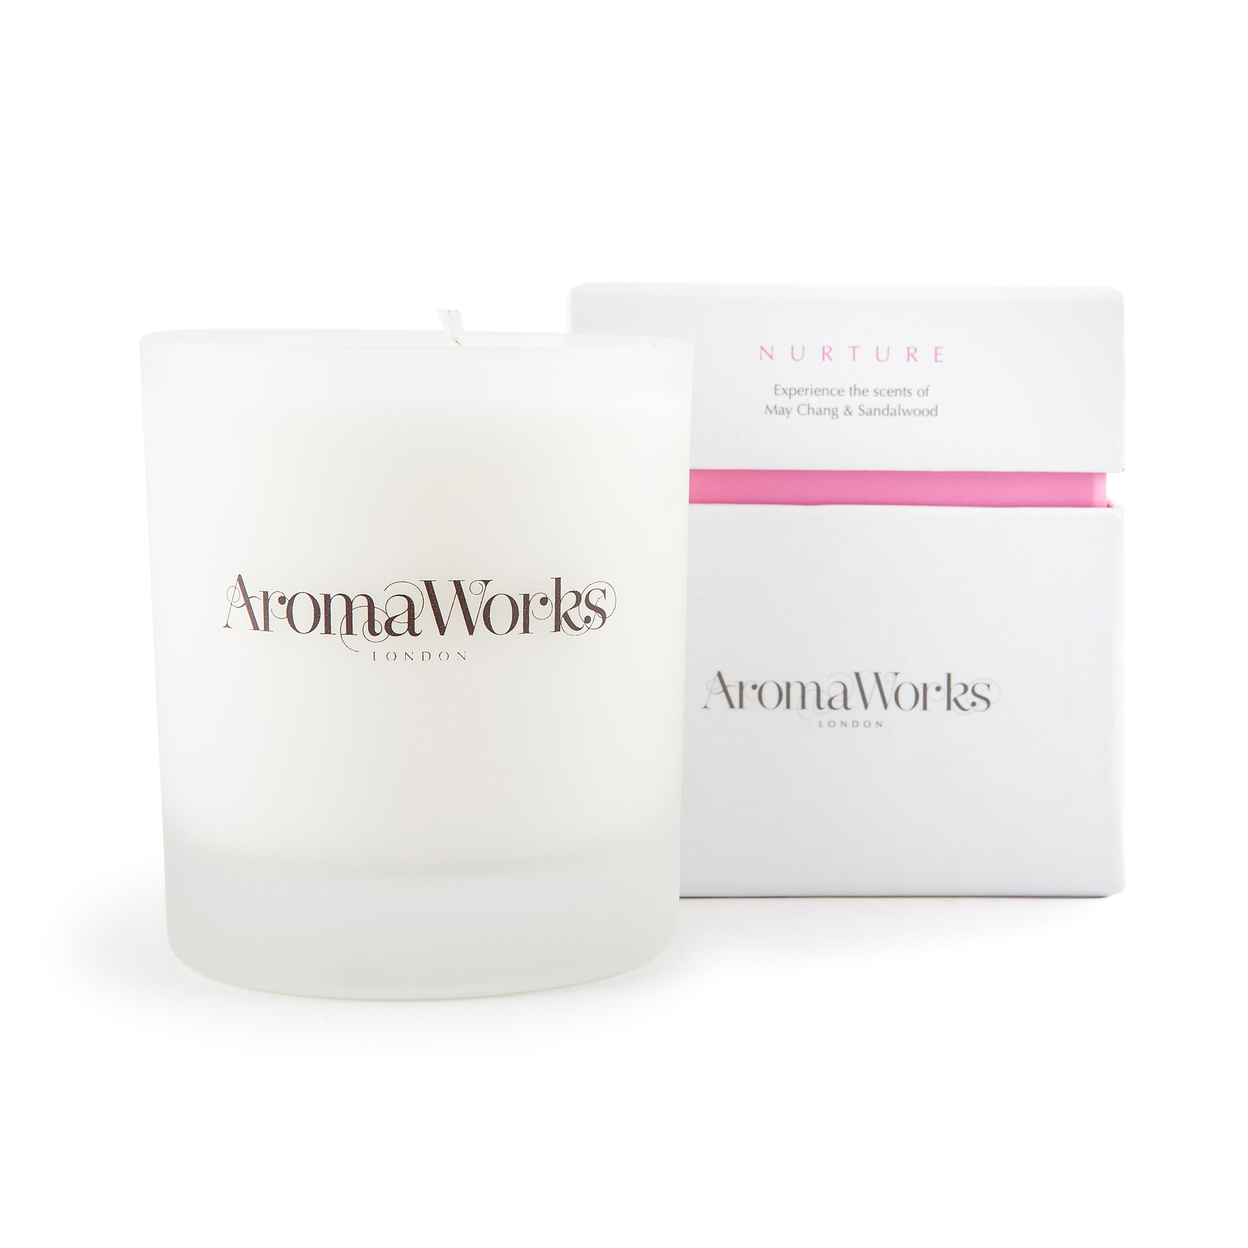 Aromaworks Nurture Candle 7.76 Oz